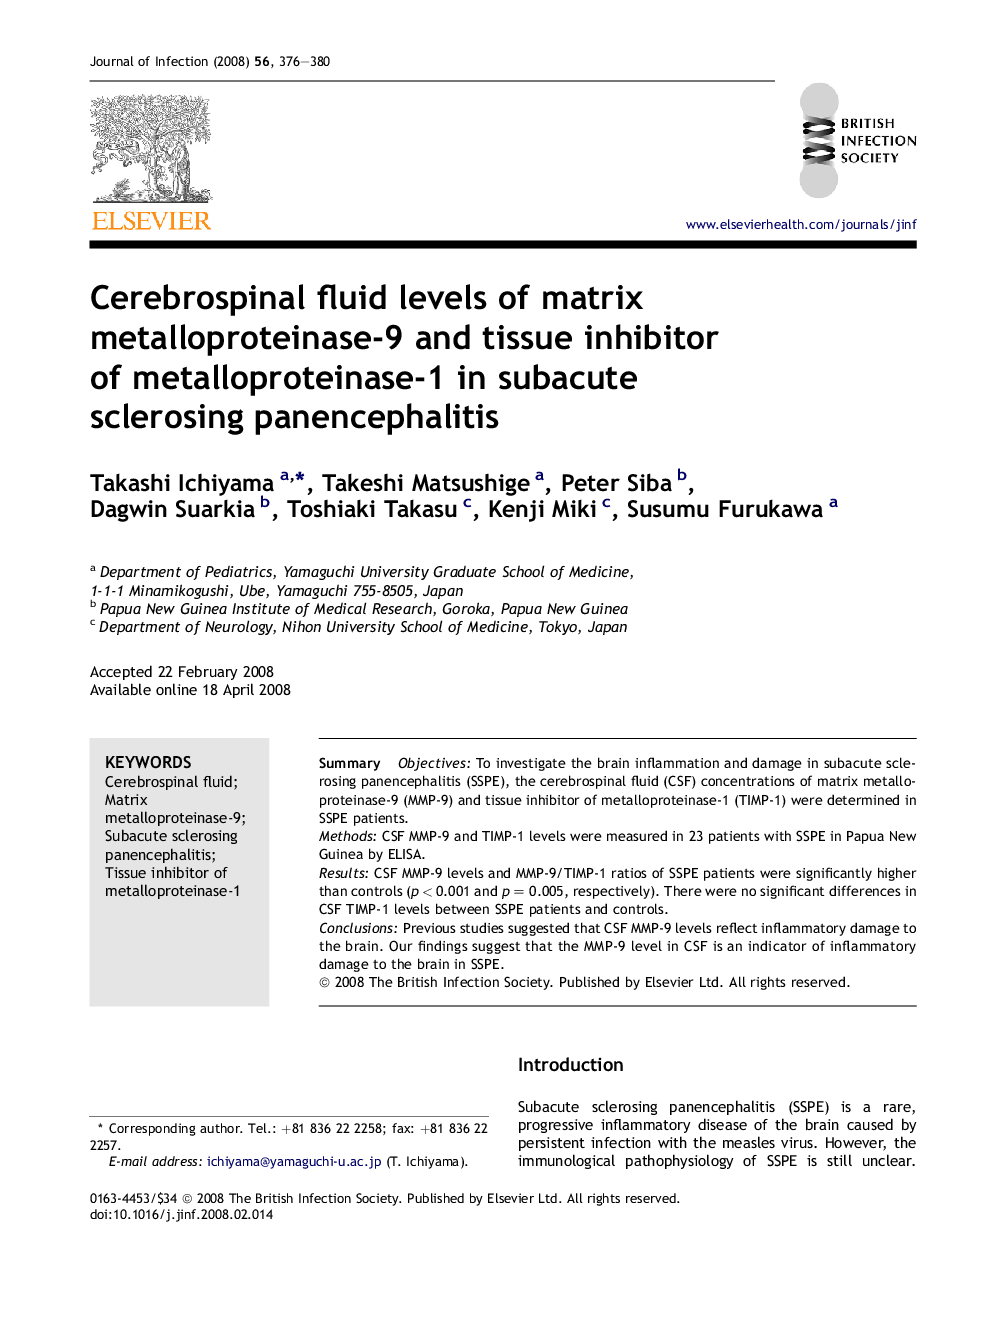 Cerebrospinal fluid levels of matrix metalloproteinase-9 and tissue inhibitor of metalloproteinase-1 in subacute sclerosing panencephalitis